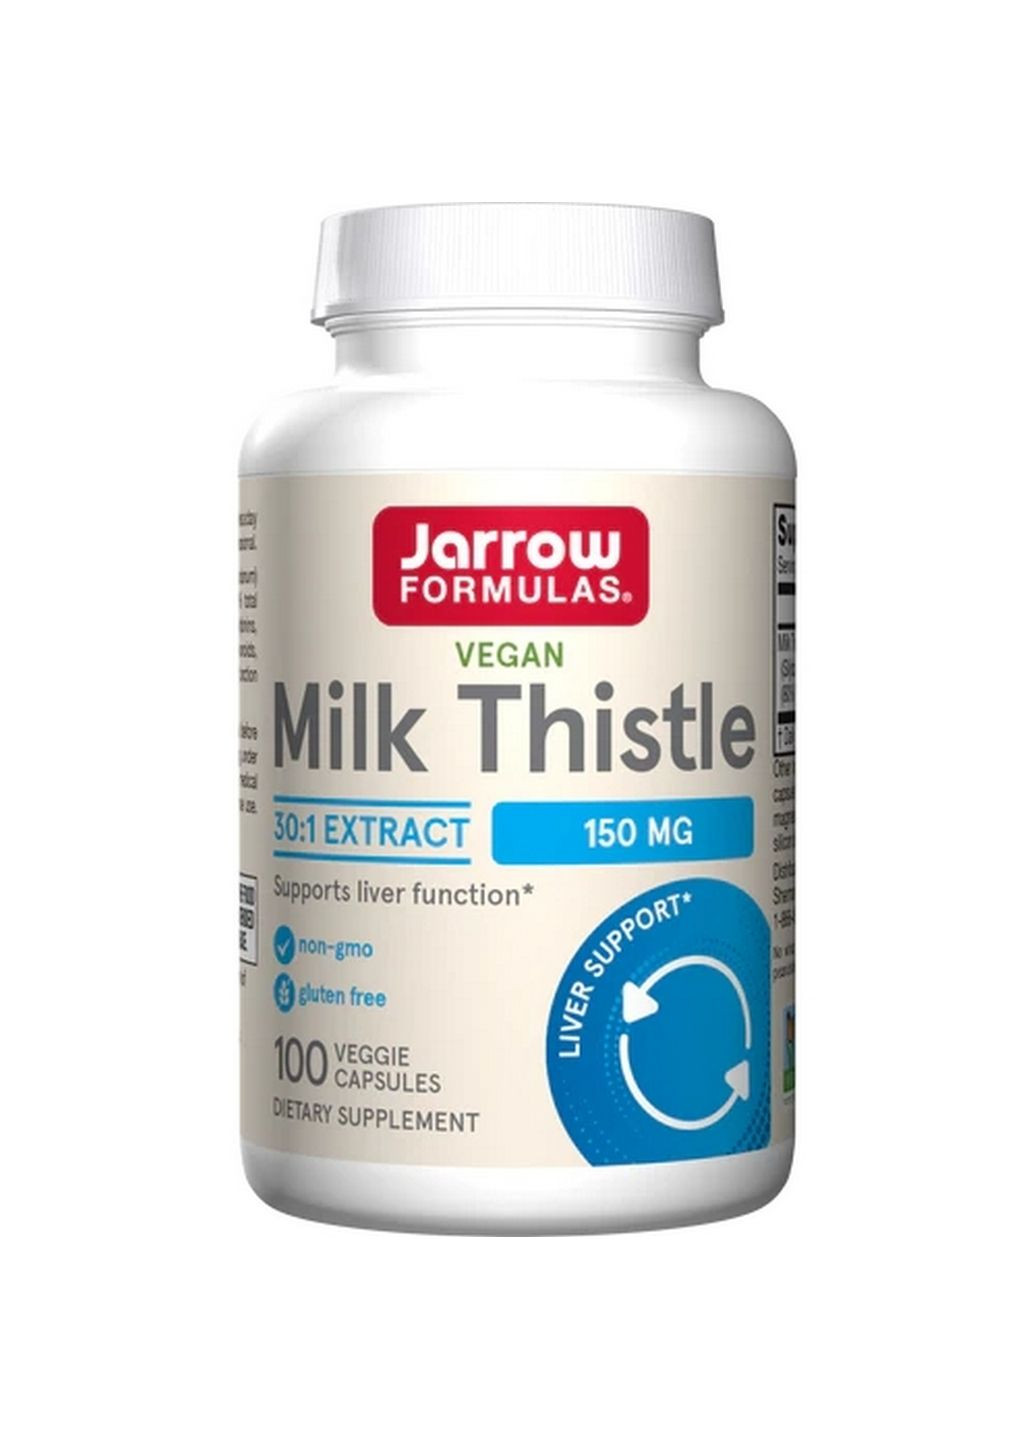 Натуральная добавка Milk Thistle 150 mg, 100 капсул Jarrow Formulas (293421650)